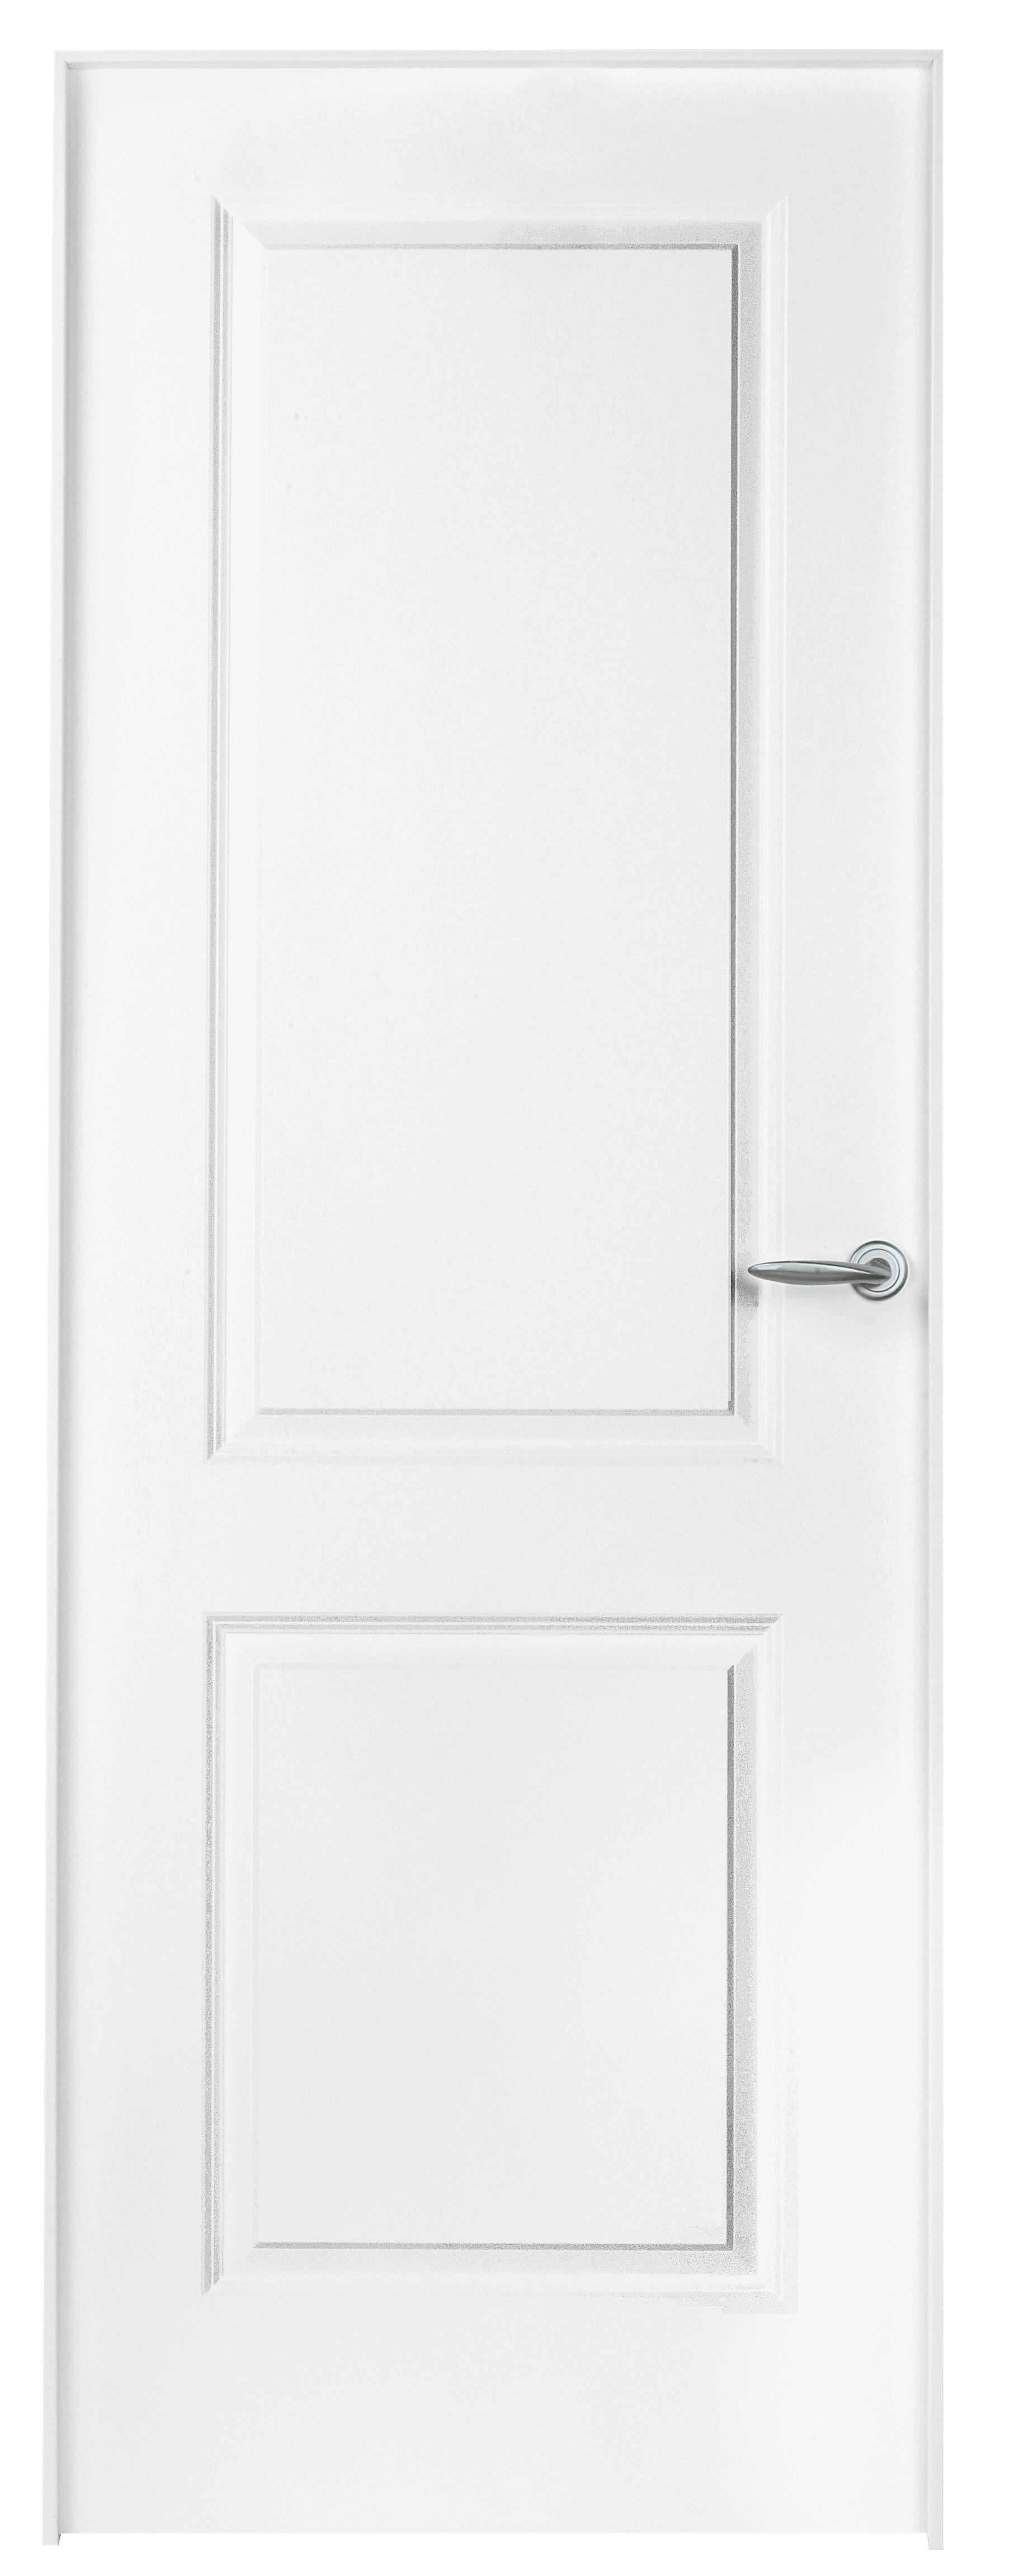 Puerta bonn blanco apertura izquierda 72.5cm